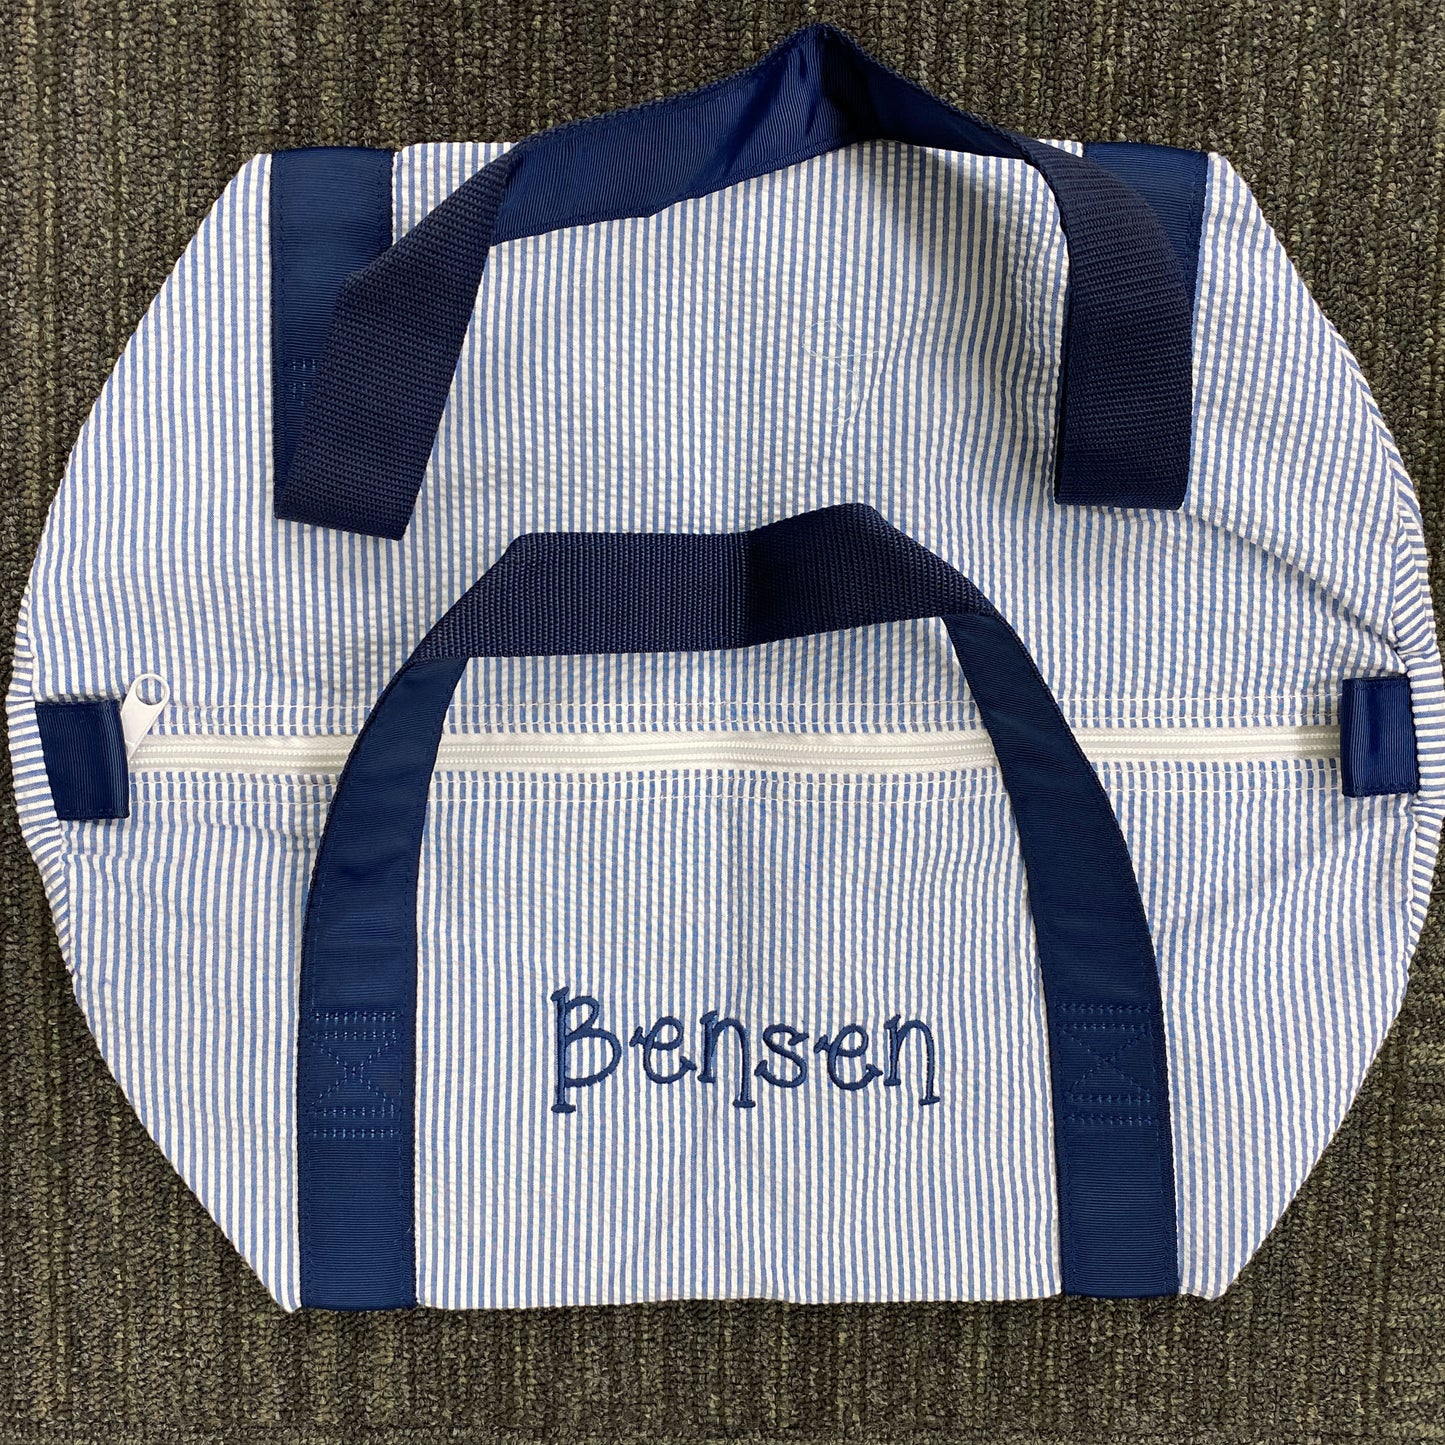 Personalized Seersucker Blue Navy Duffel Bag - Give Wink